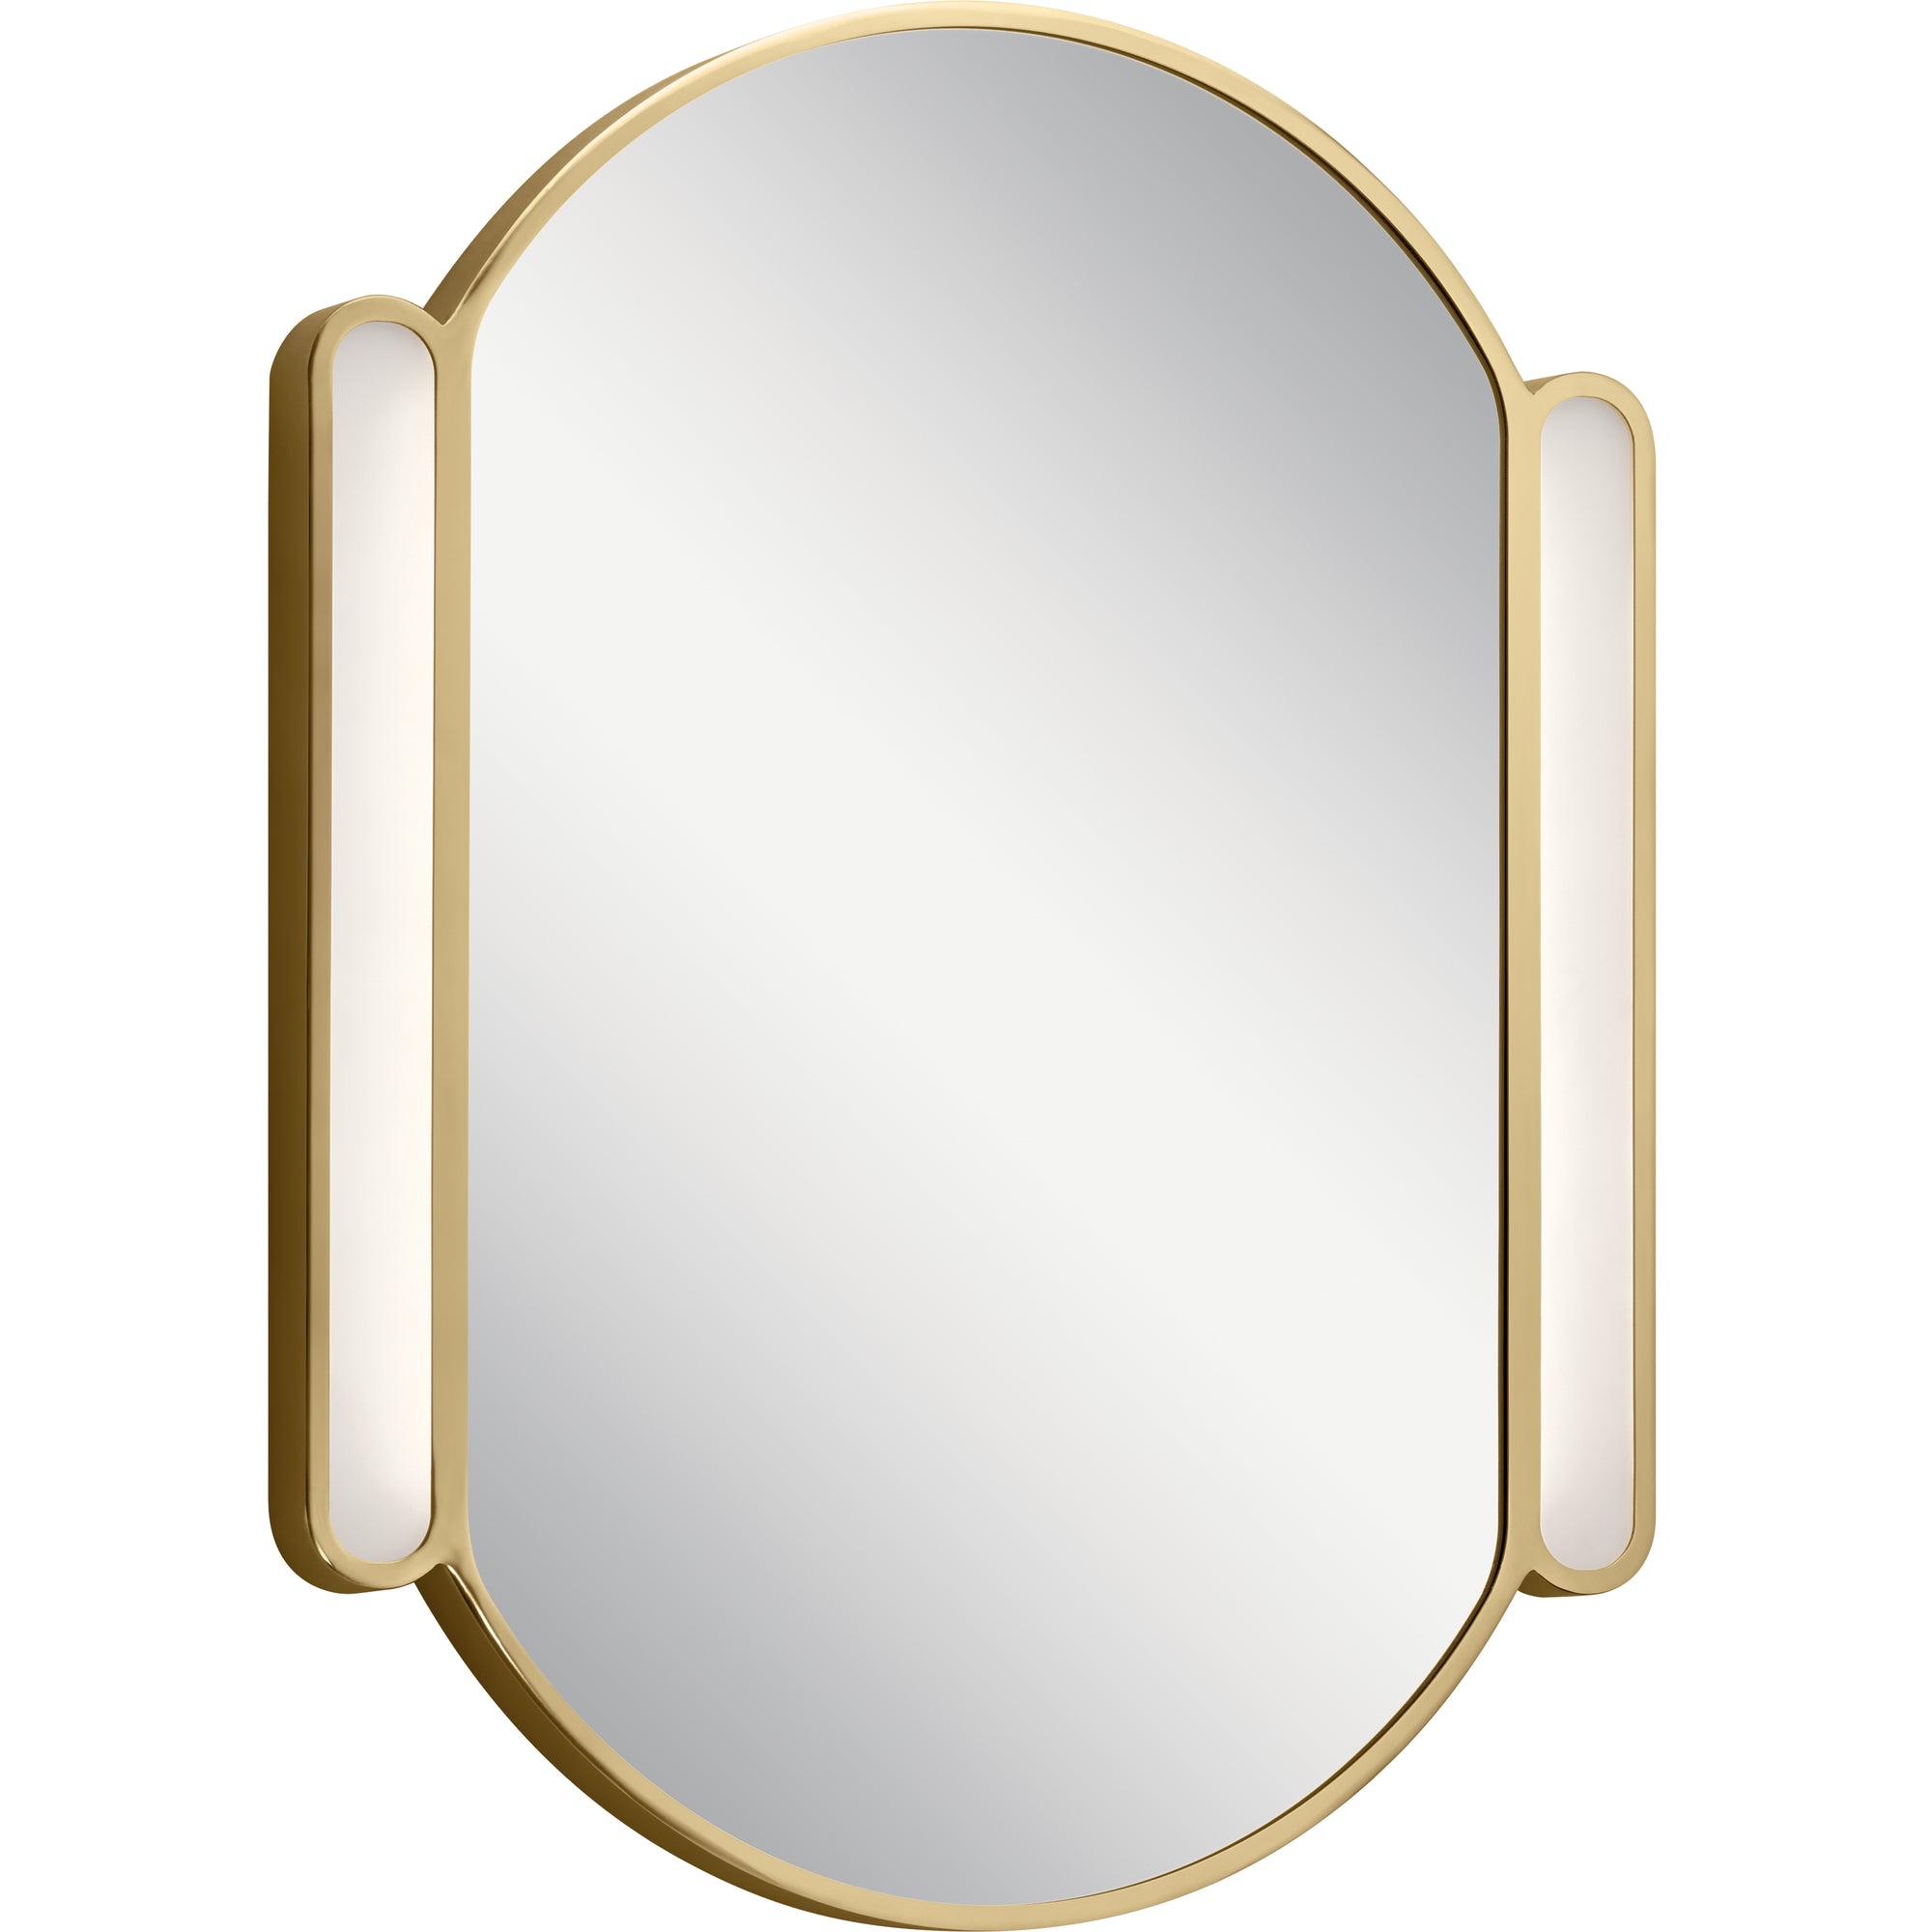 SORNO Lighting mirror Gold - 84165CG | ELAN